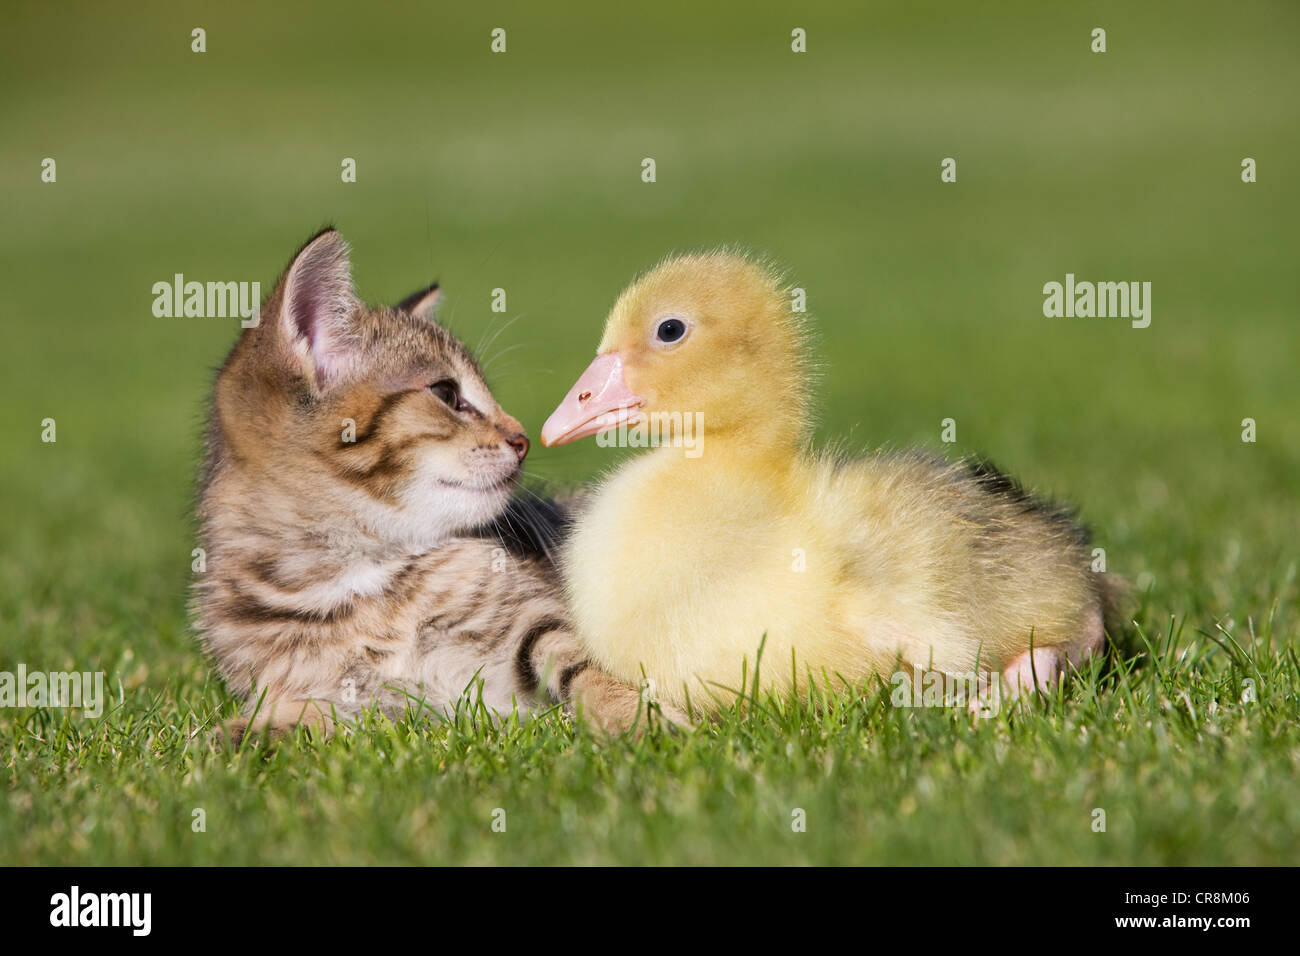 Kitten and gosling on grass Stock Photo